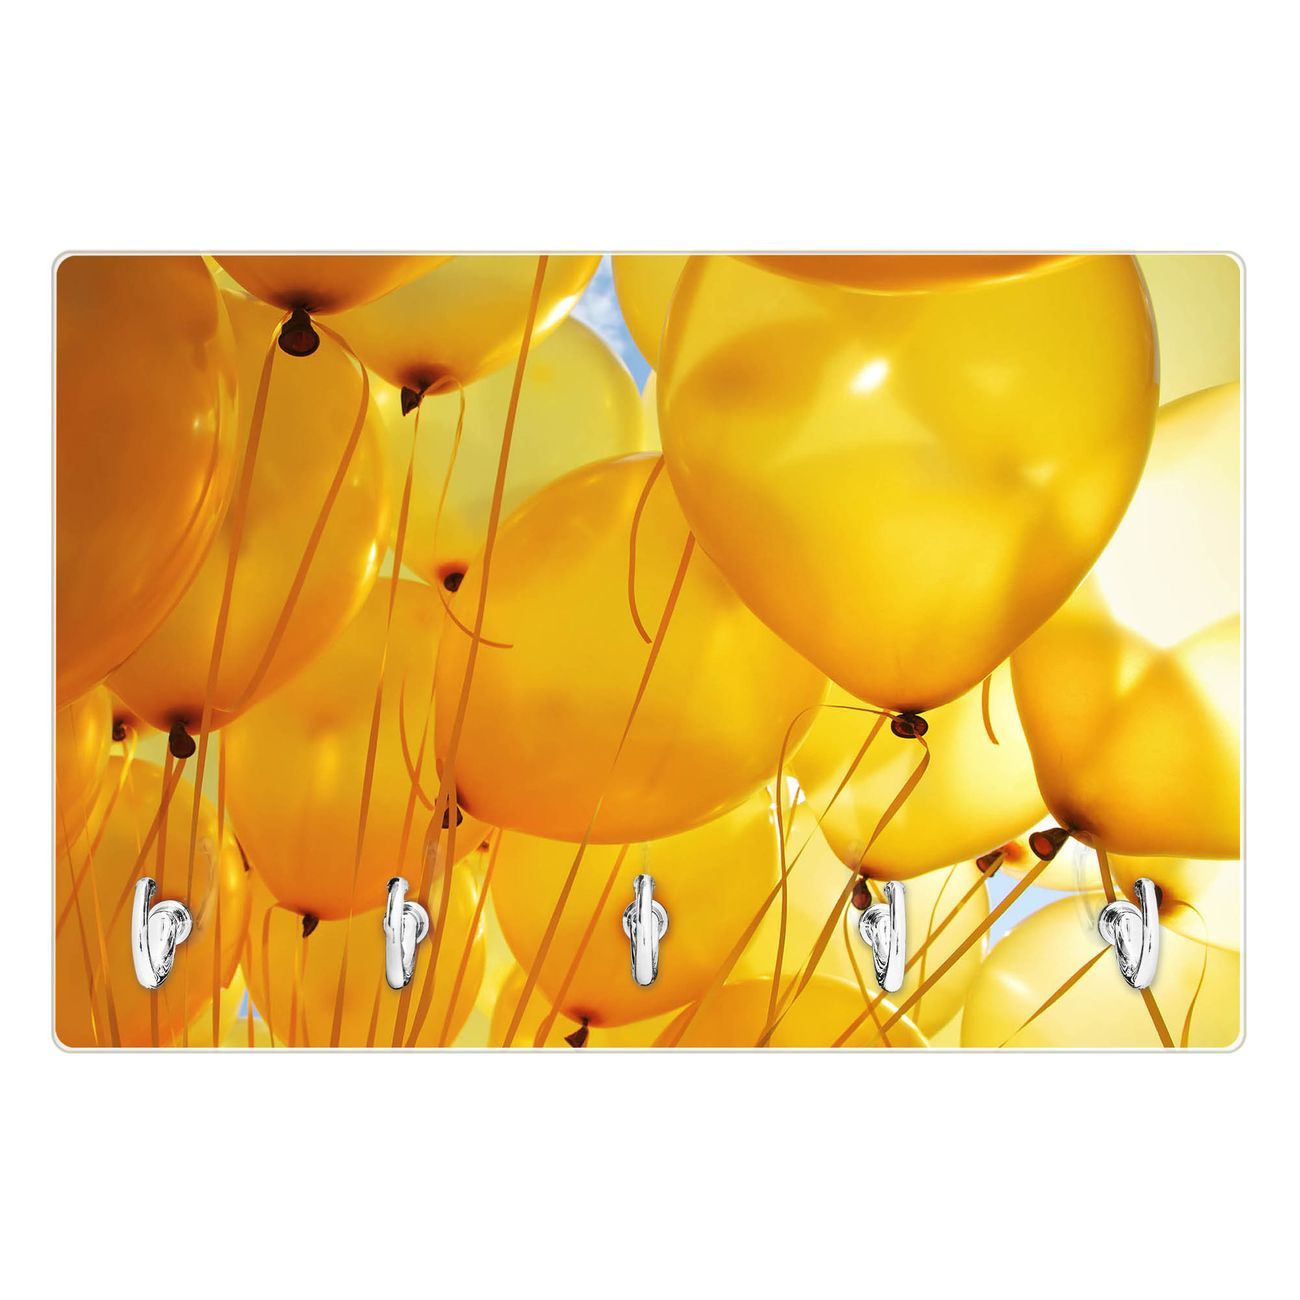  Luftballons Hintergrundbild 1300x1300. Glas Schlüsselbrett mit 5 Haken Gelbe Luftballons